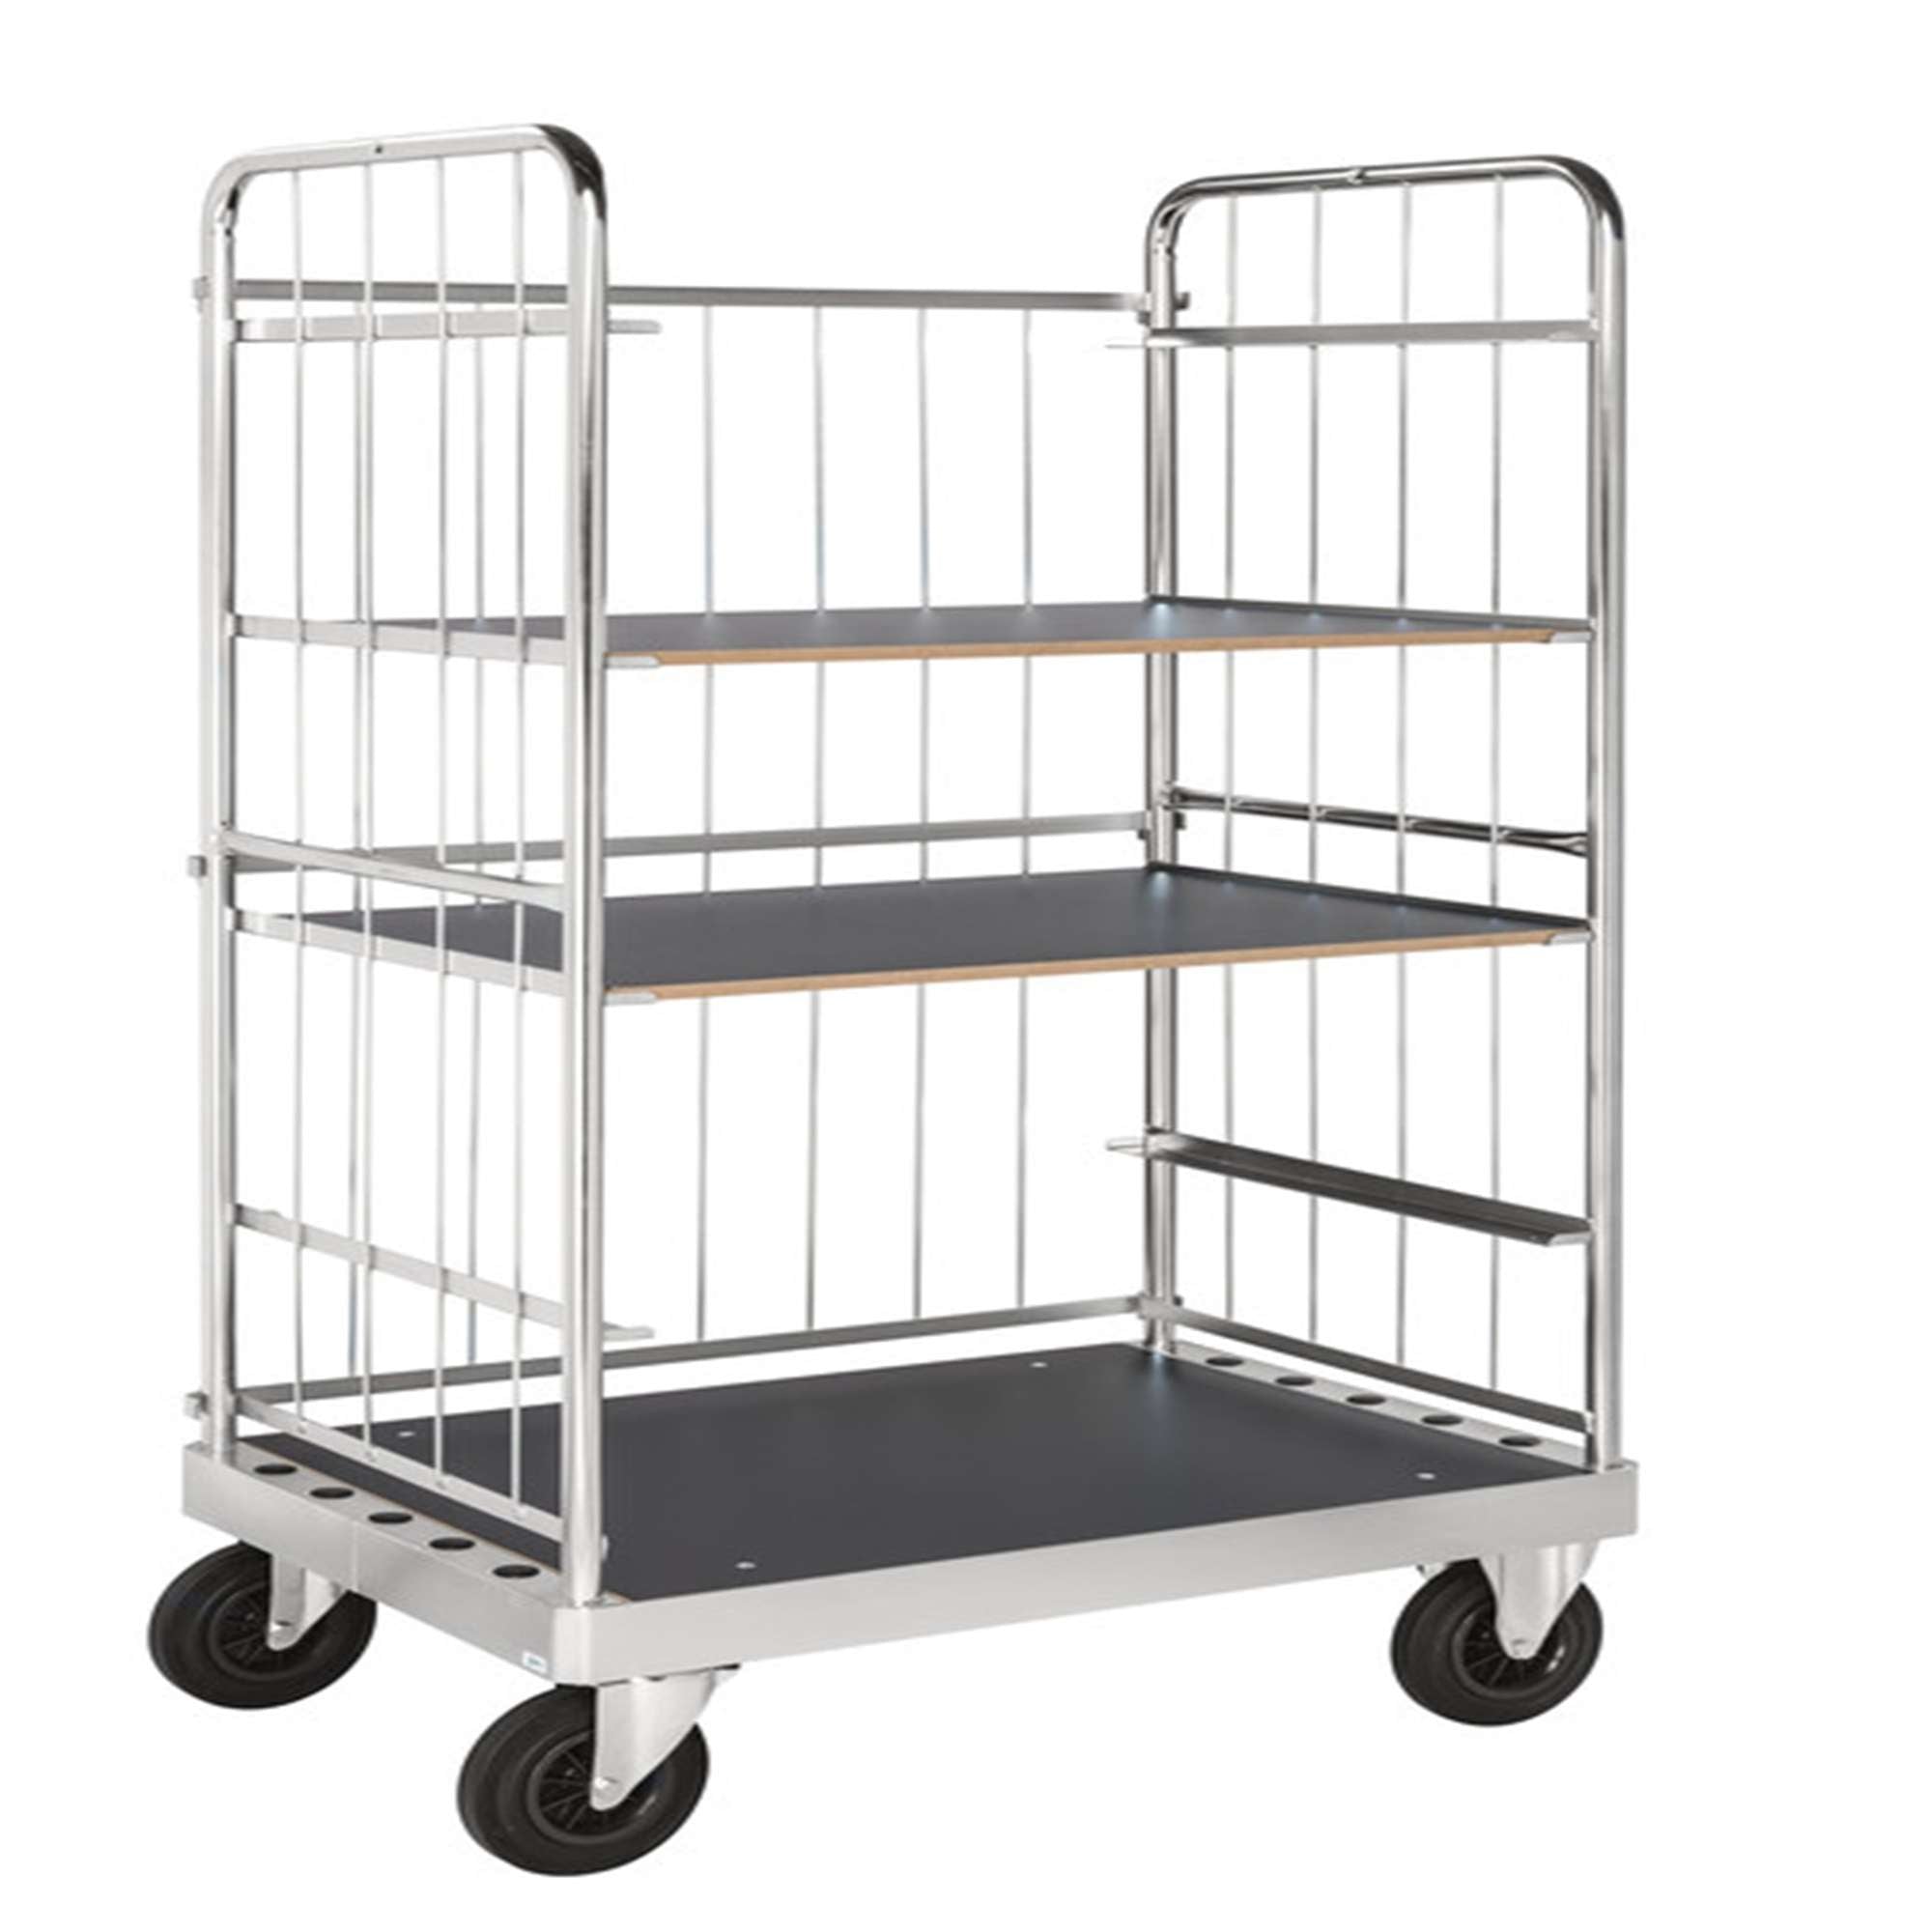 Shelf trolley comes with 2 shelves, L x W x H (mm) 1000 x 700 x 1900